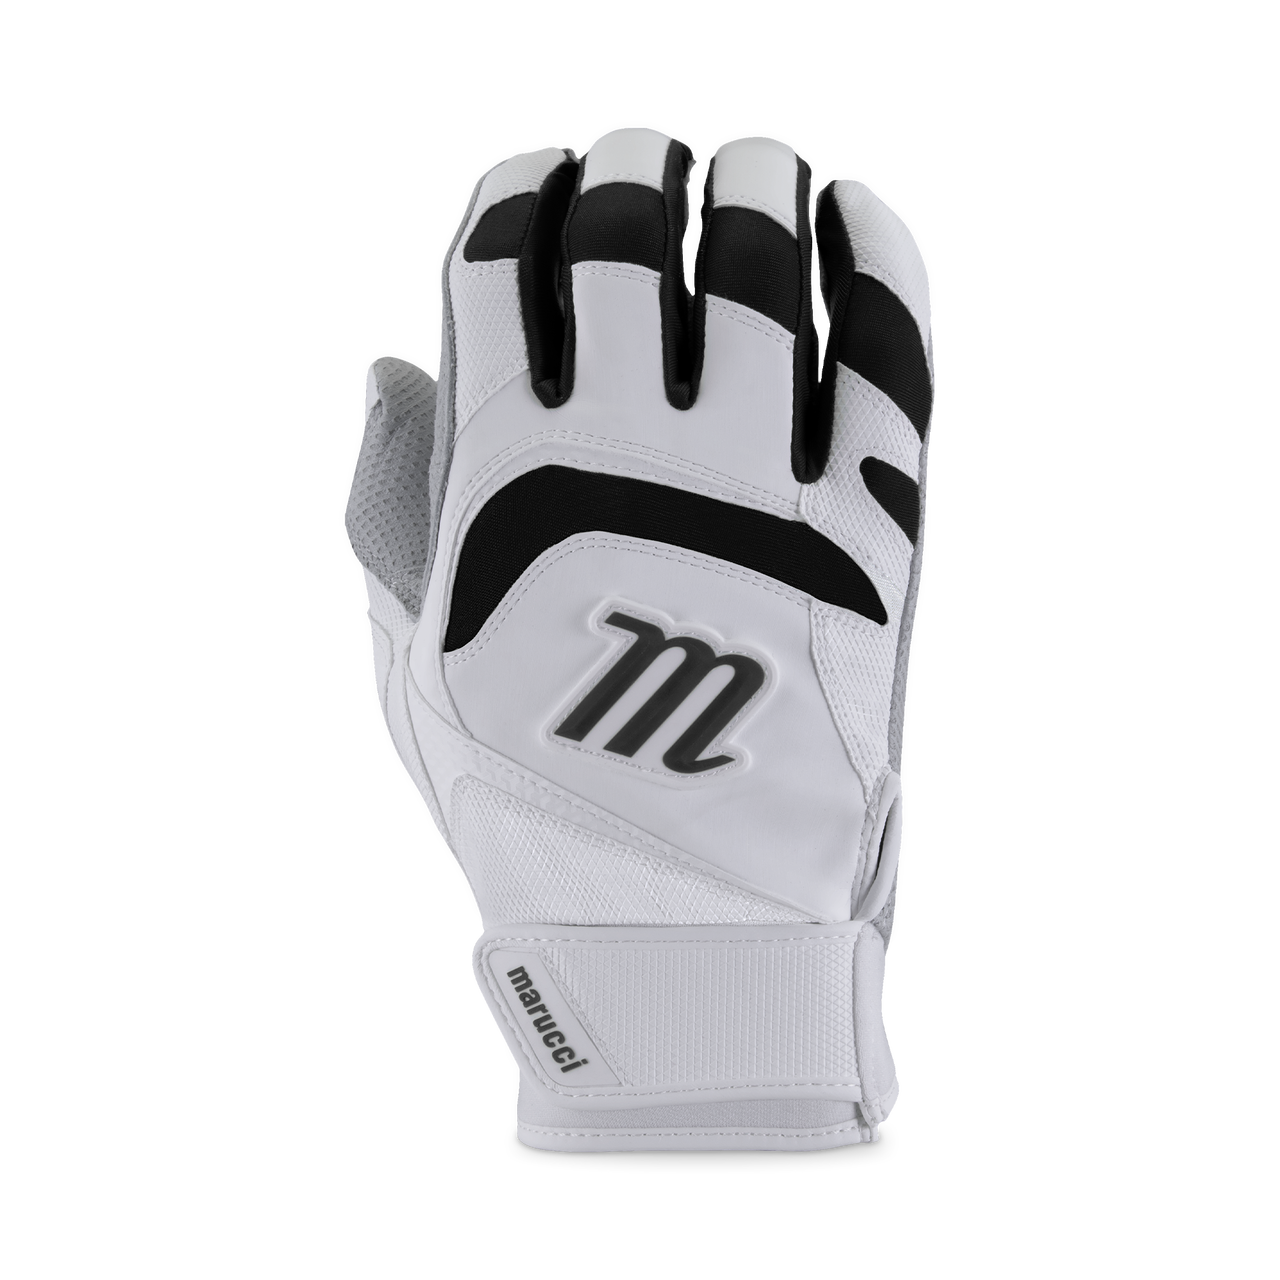 Marucci Signature Batting Gloves White Black